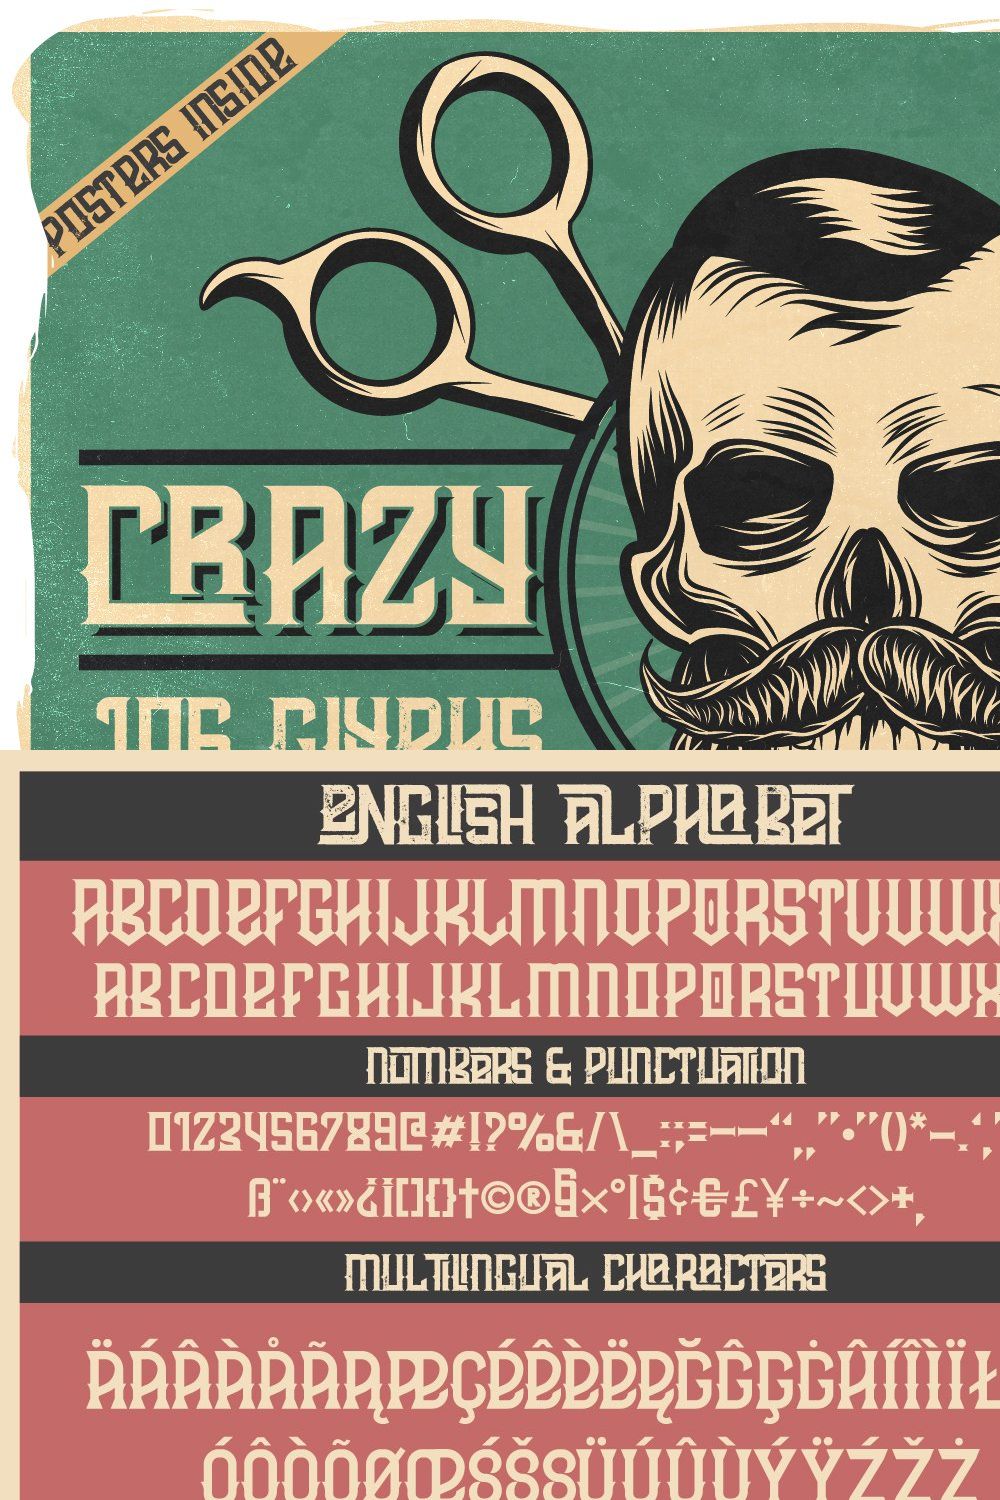 Crazy Barber font with bonuses pinterest preview image.